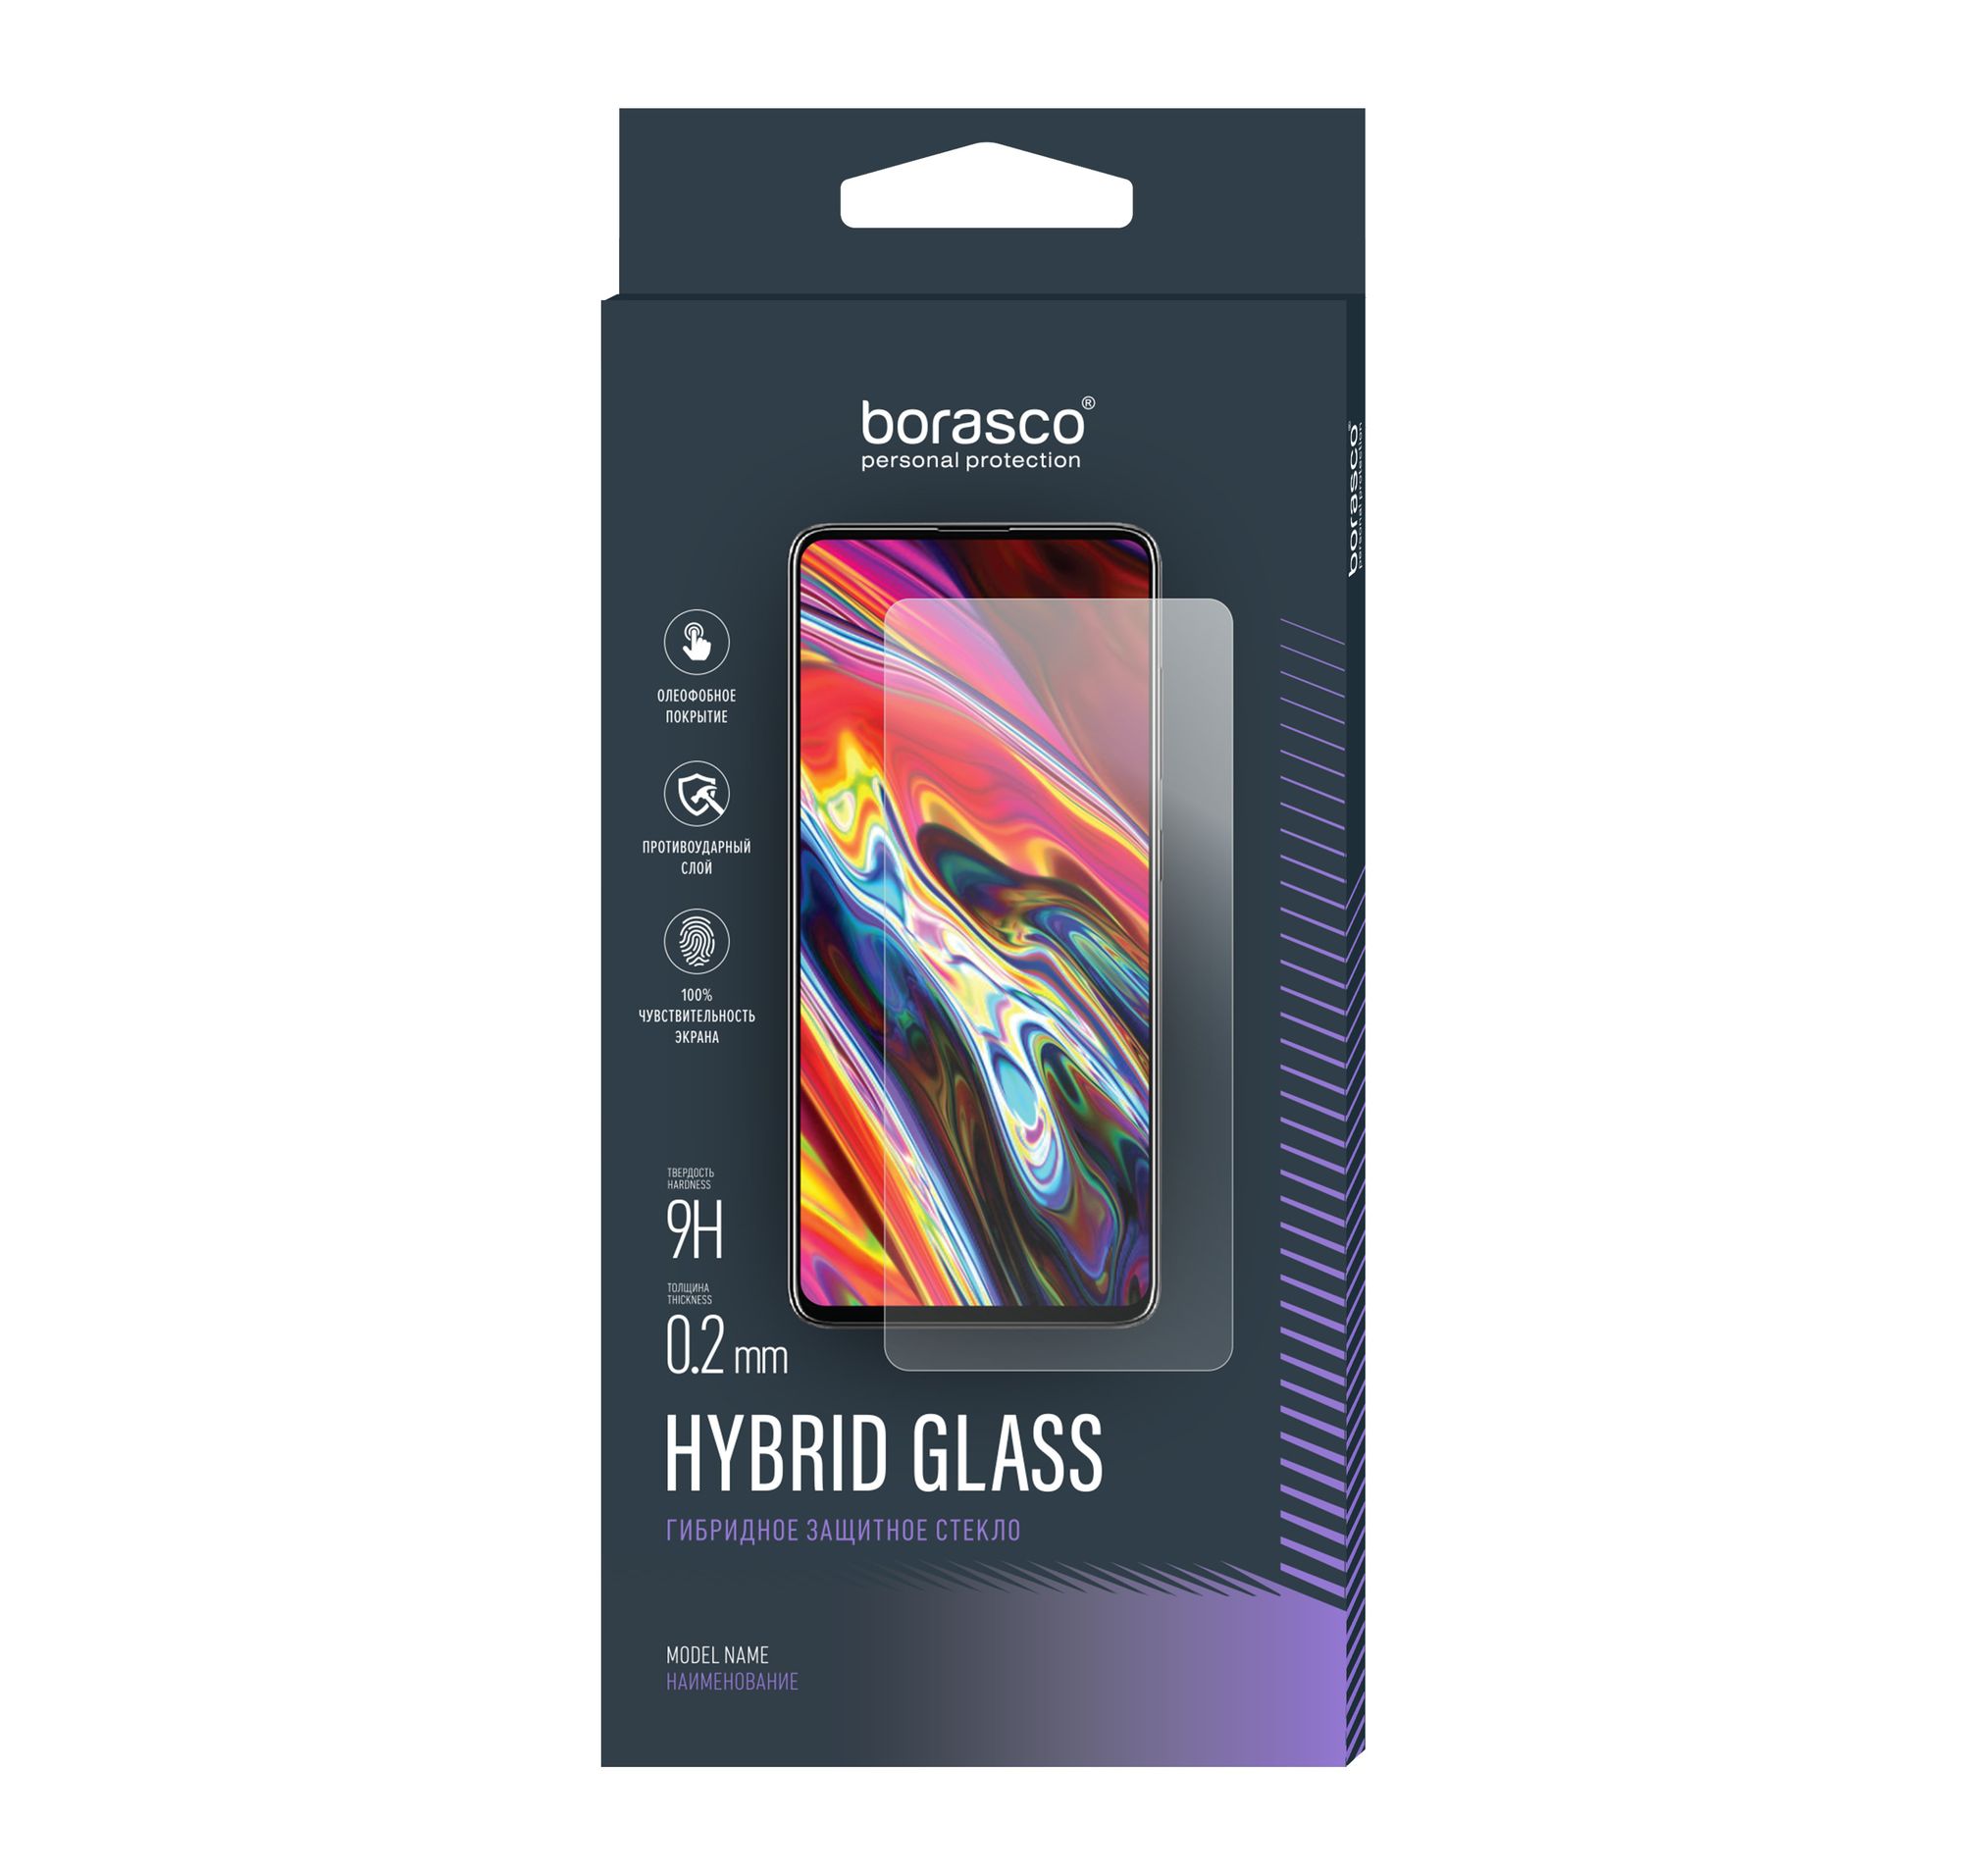 Стекло защитное Hybrid Glass VSP 0,26 мм для Huawei P10 цена и фото